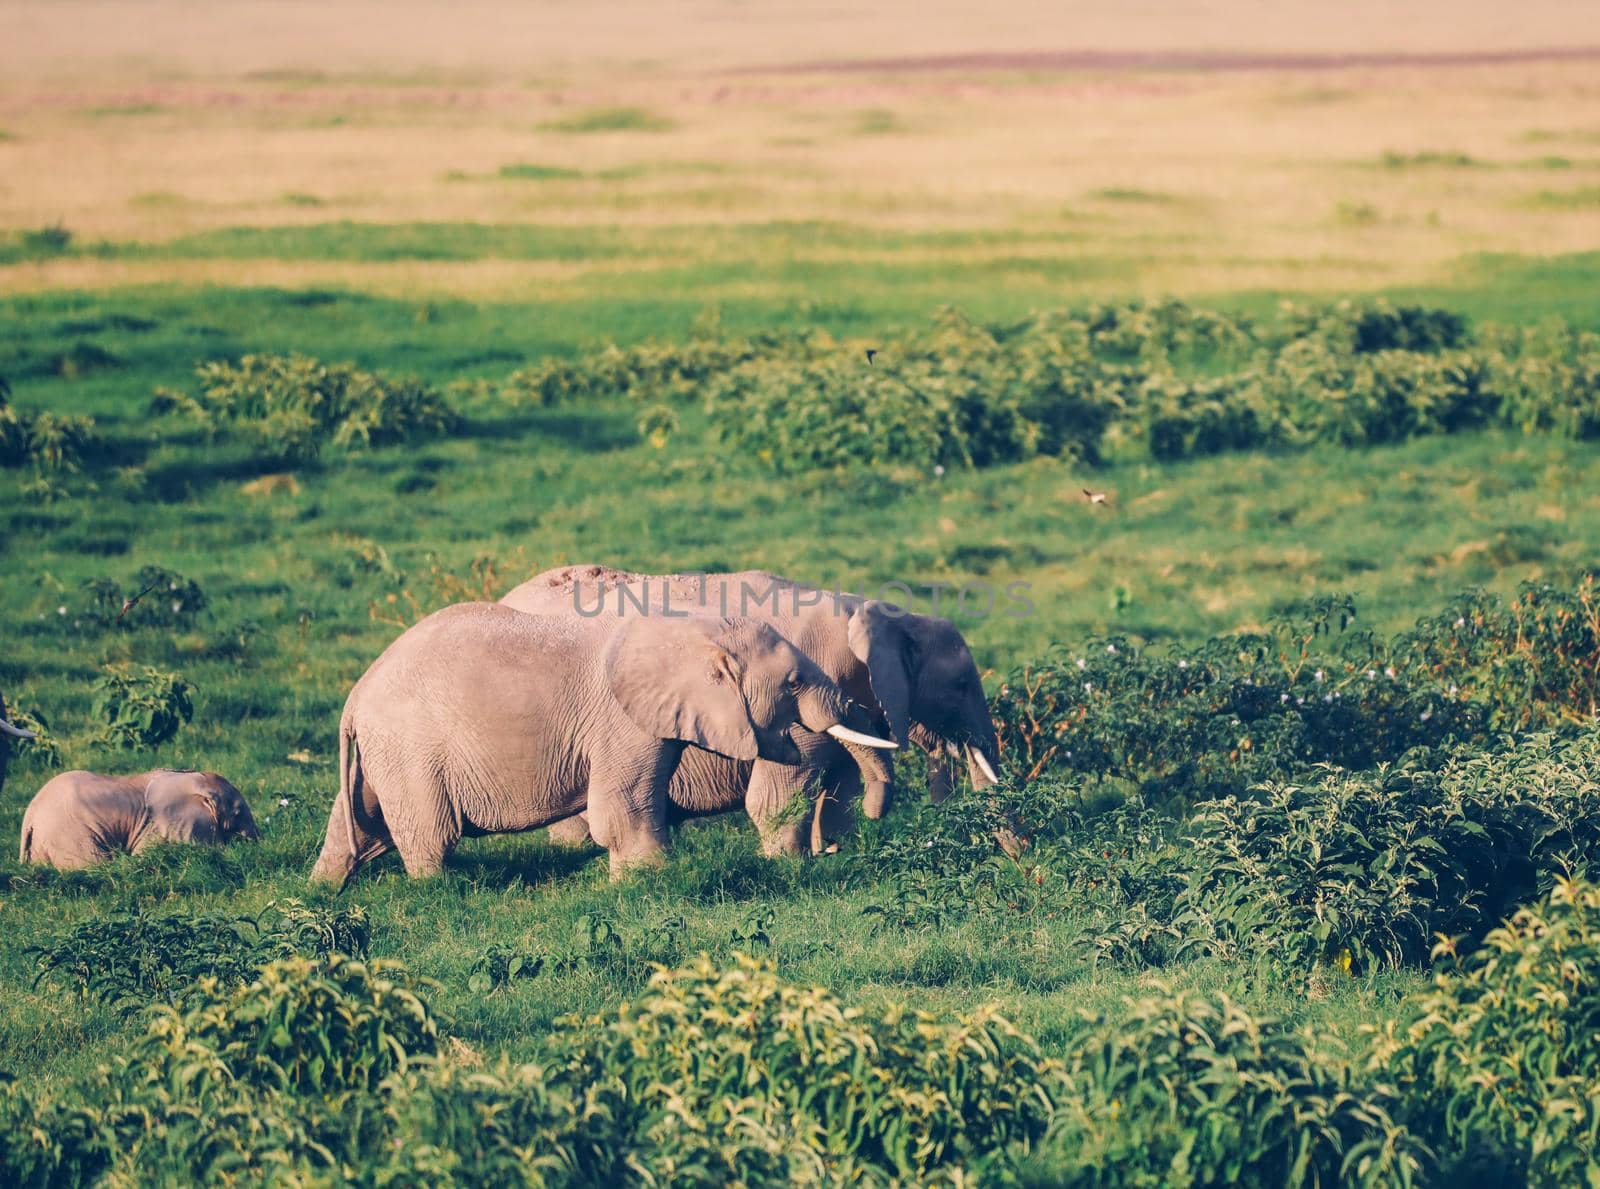 Elephants in Amboseli Nationalpark, Kenya, Africa  by Weltblick